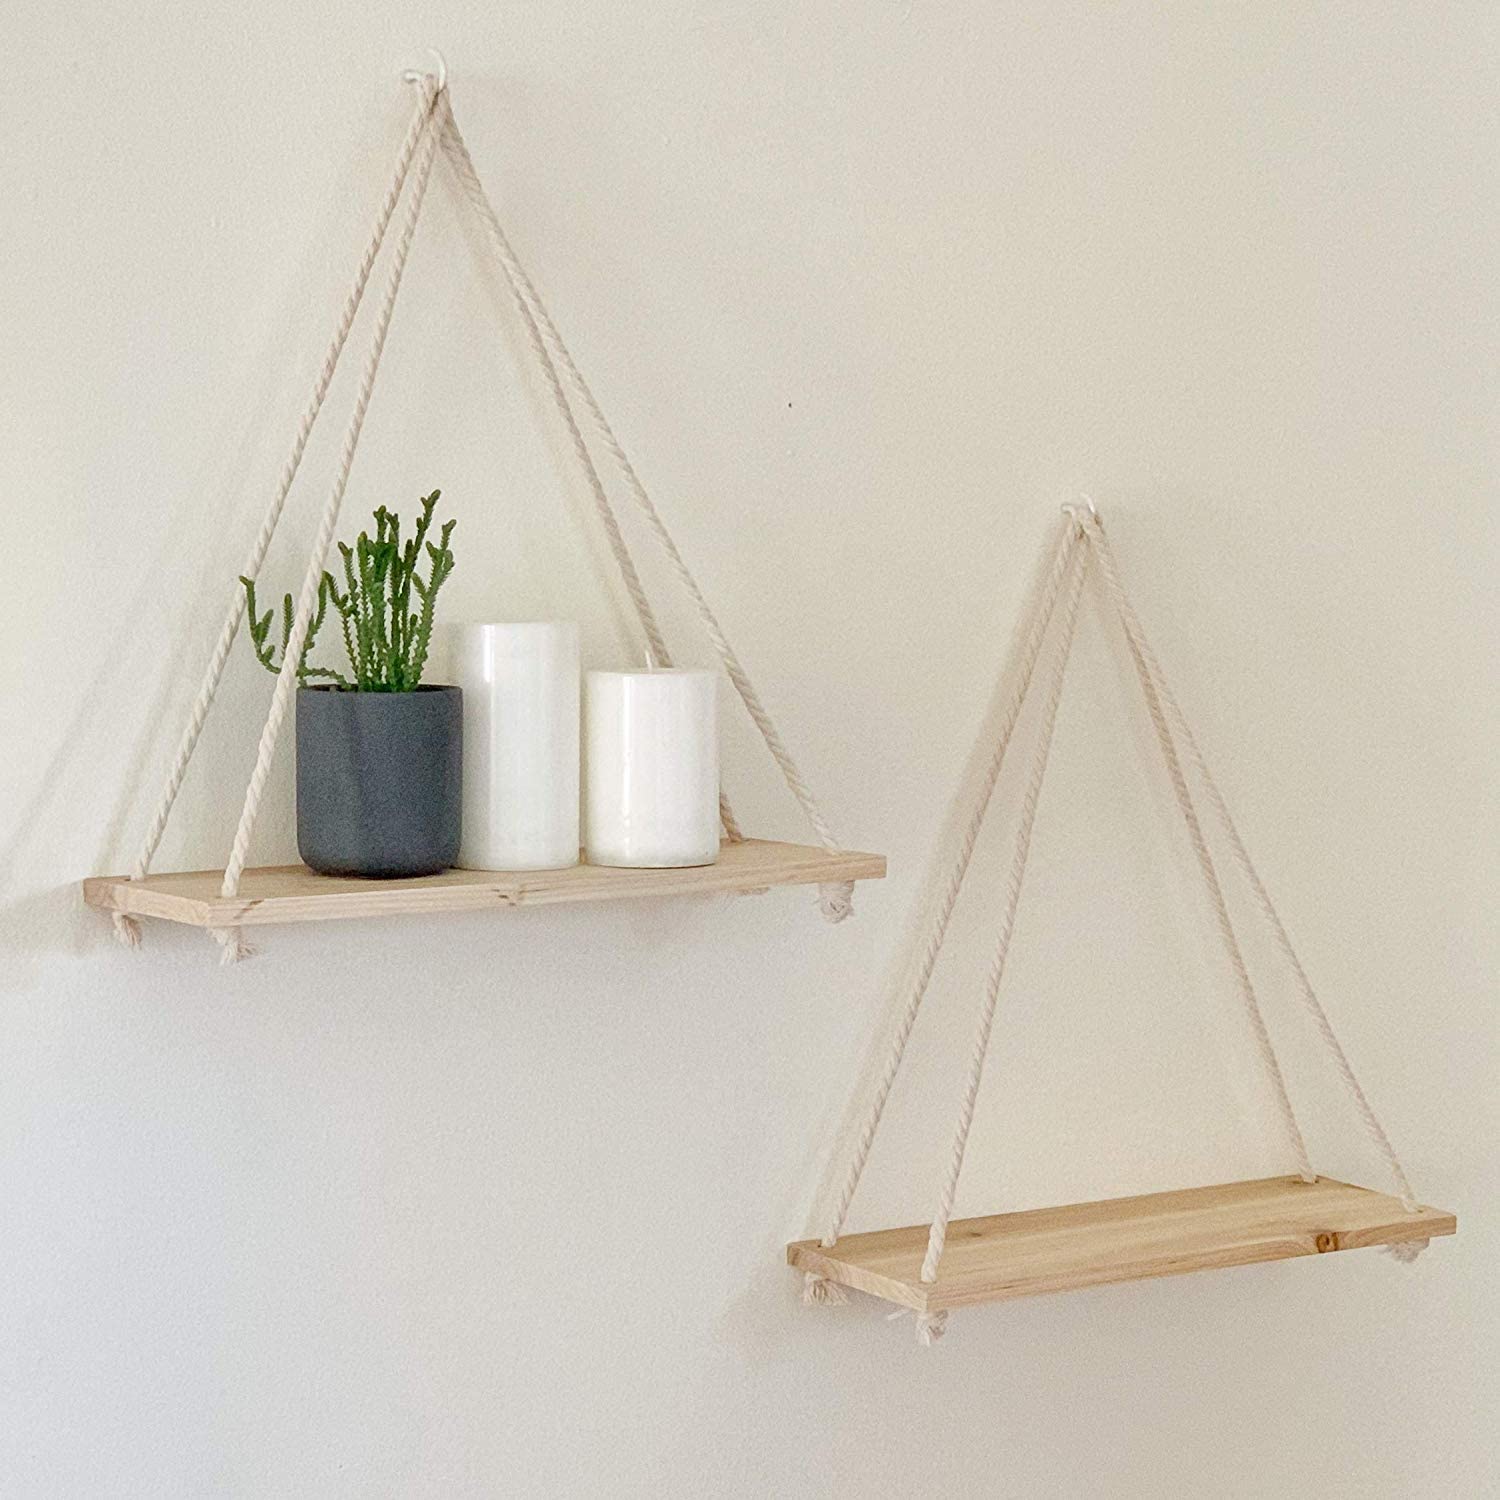 Wood Hanging Shelf Wall Swing